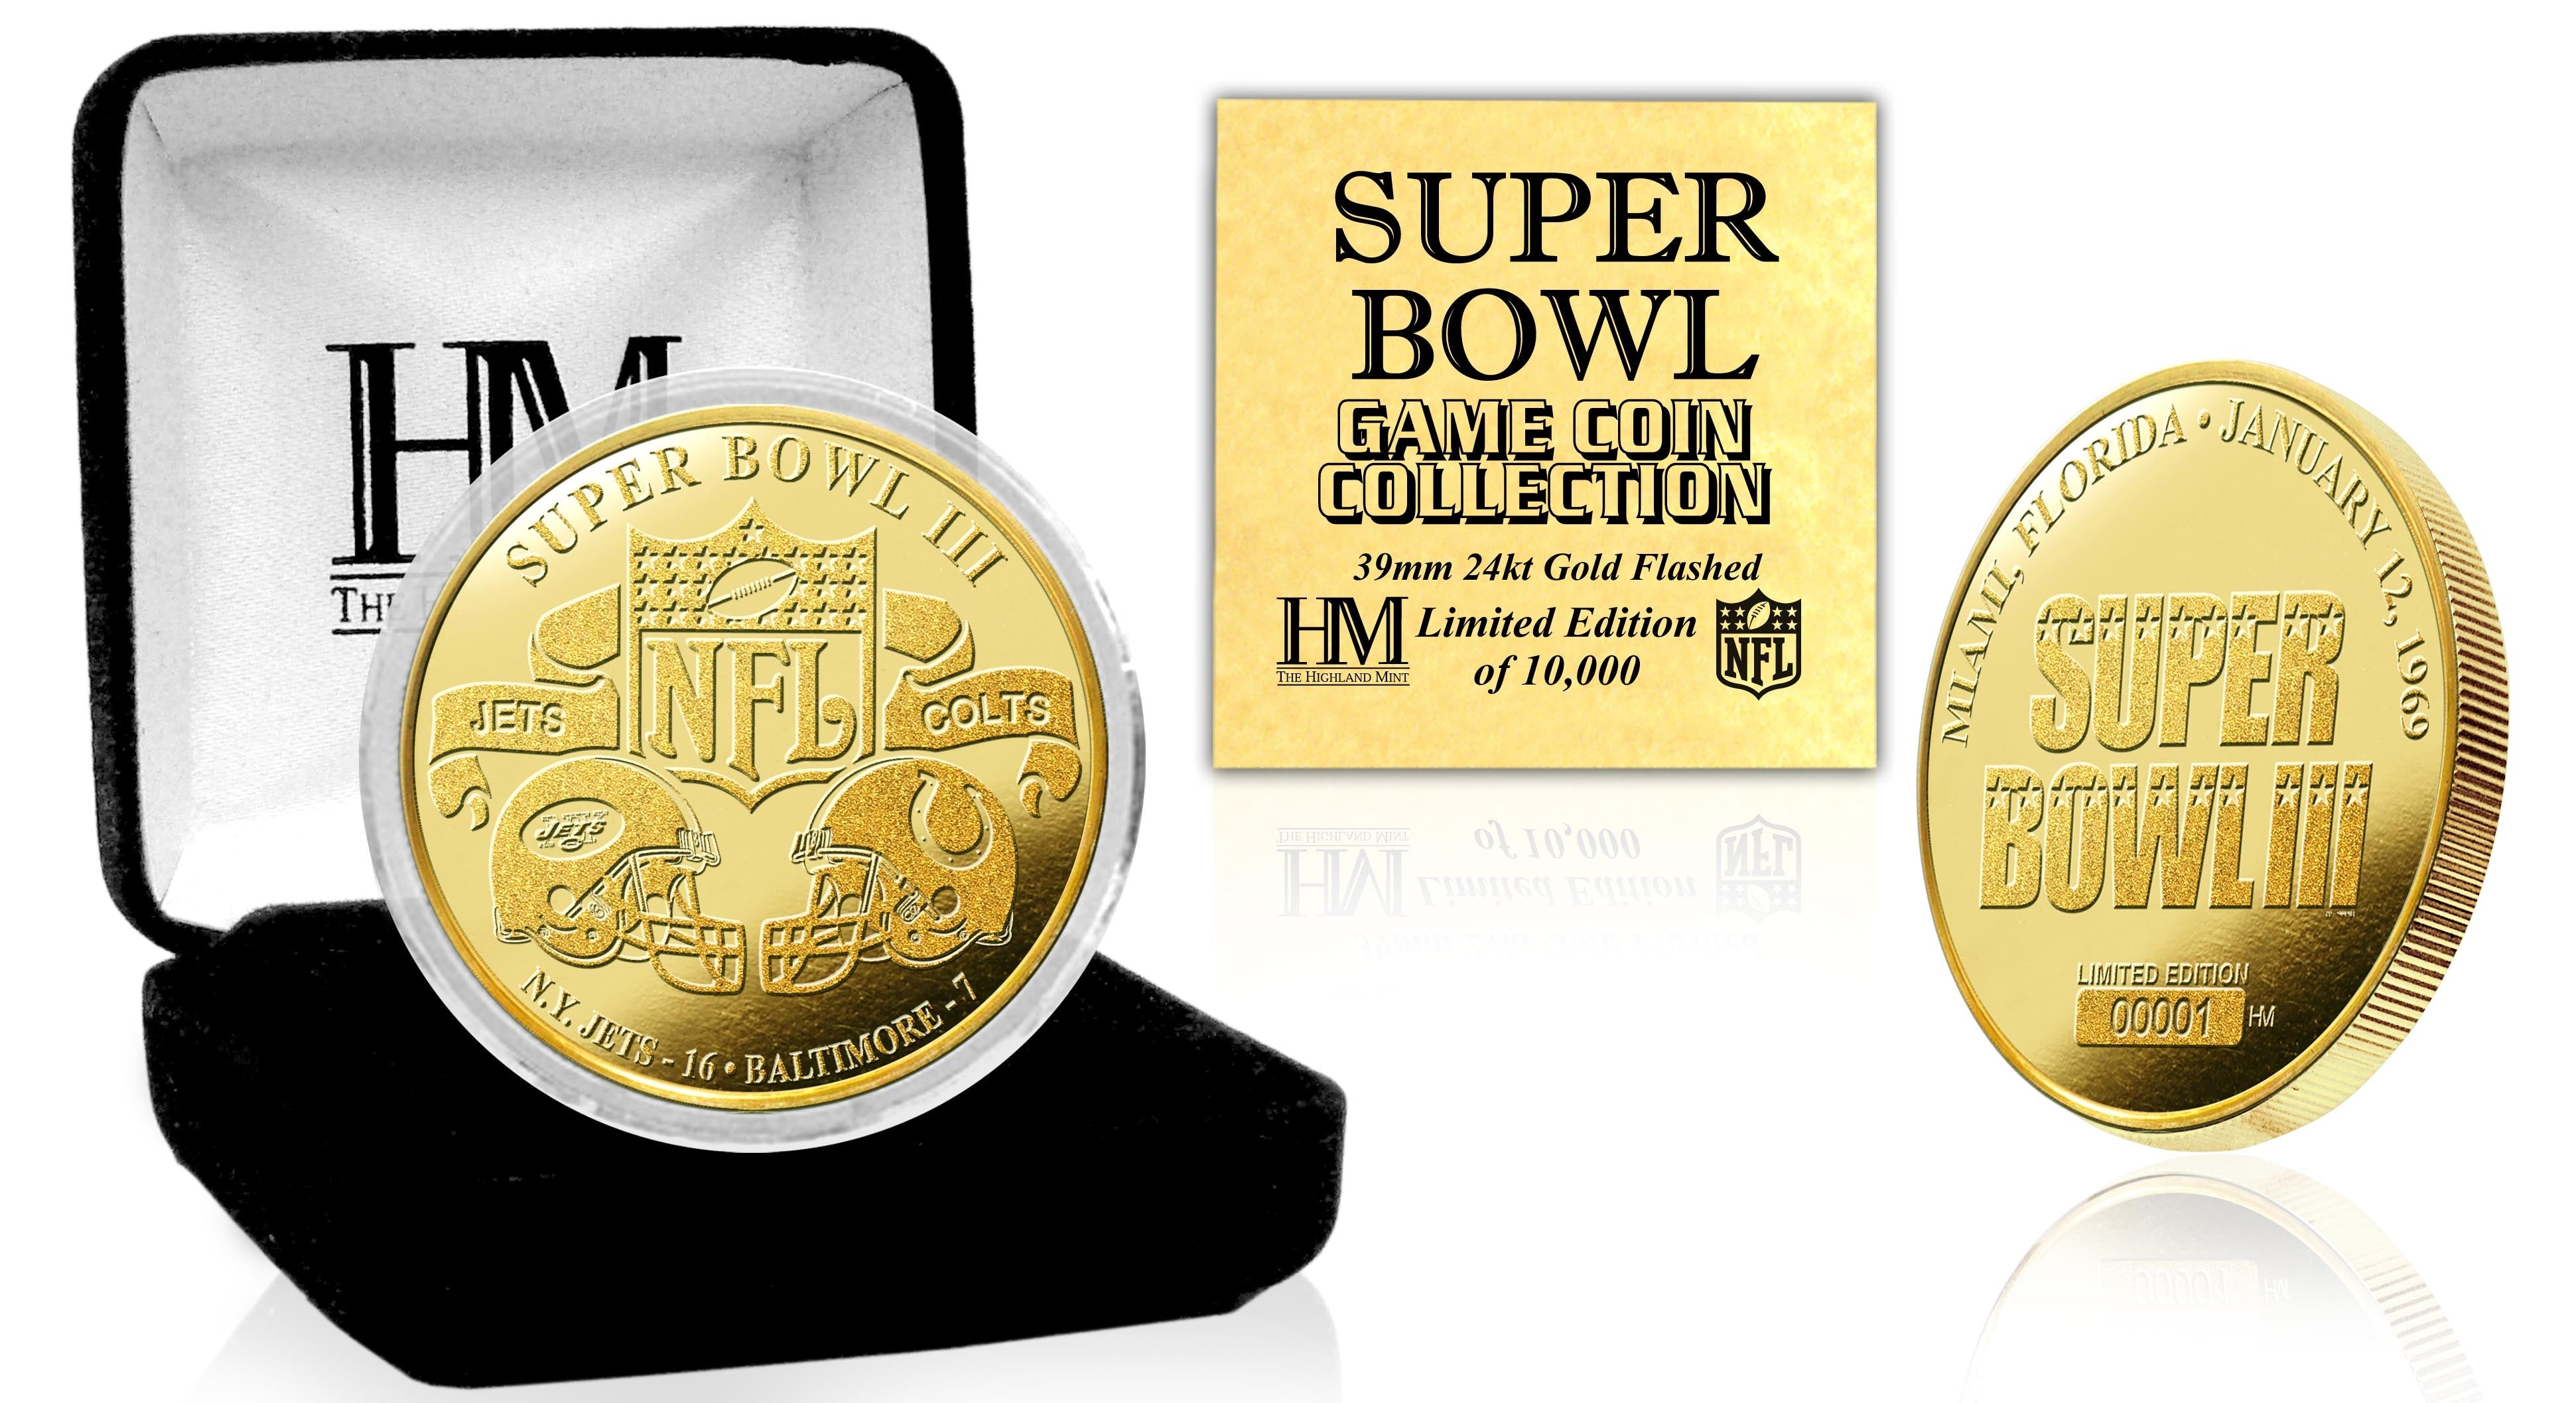 Super Bowl III 24kt Gold Flip Coin